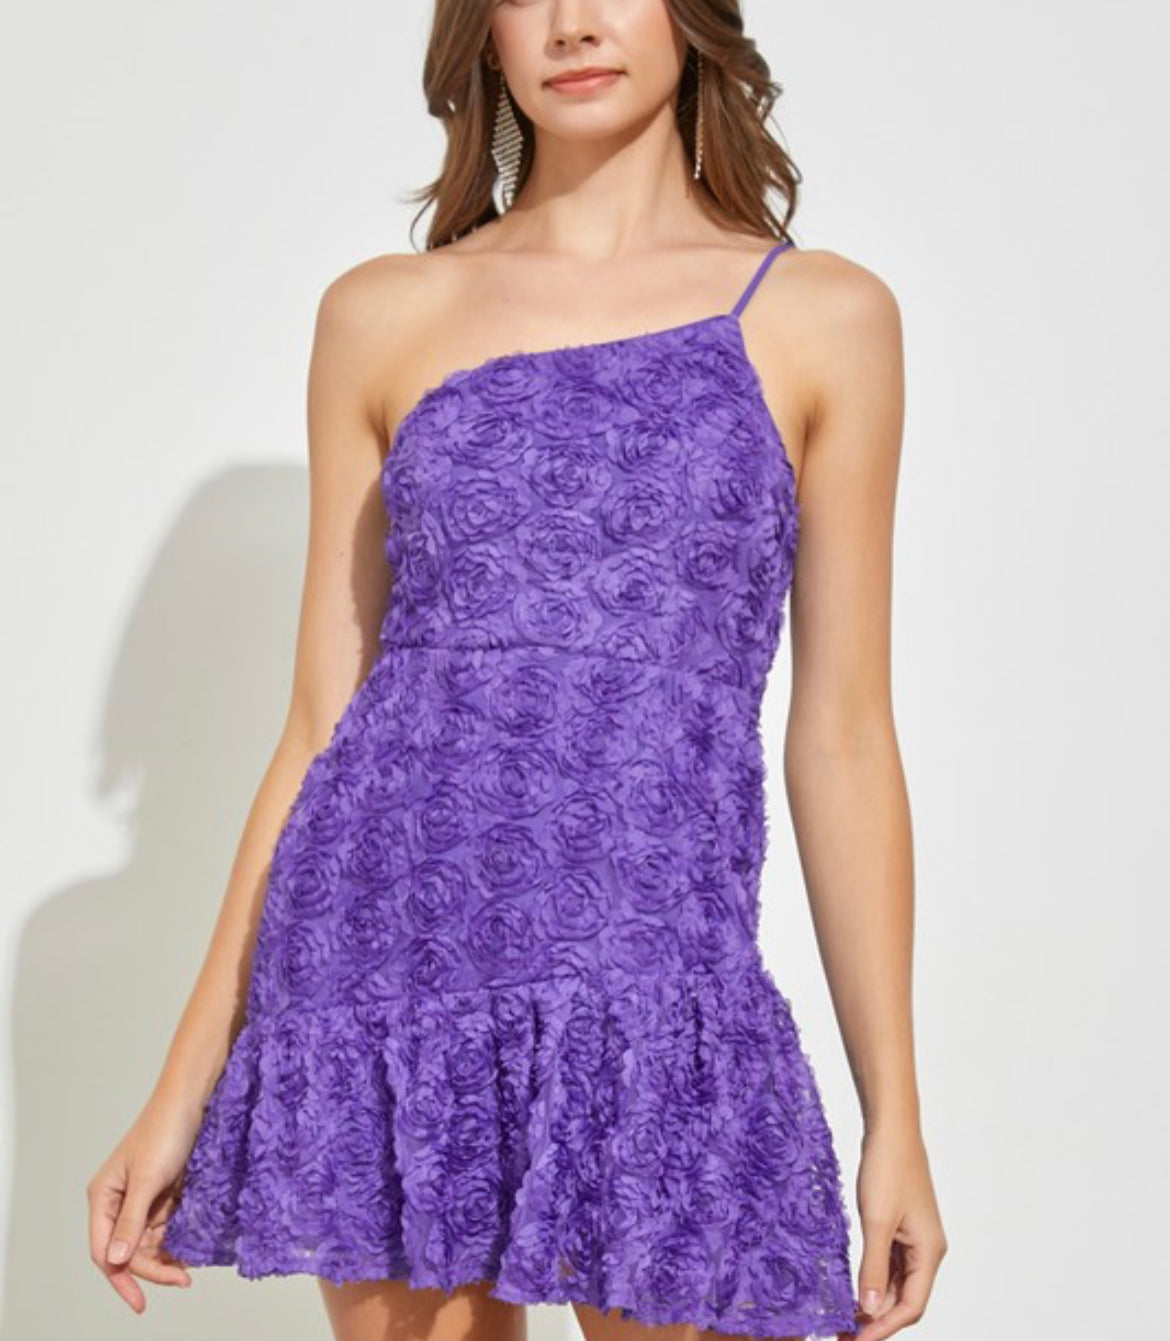 Tara one shoulder purple dress